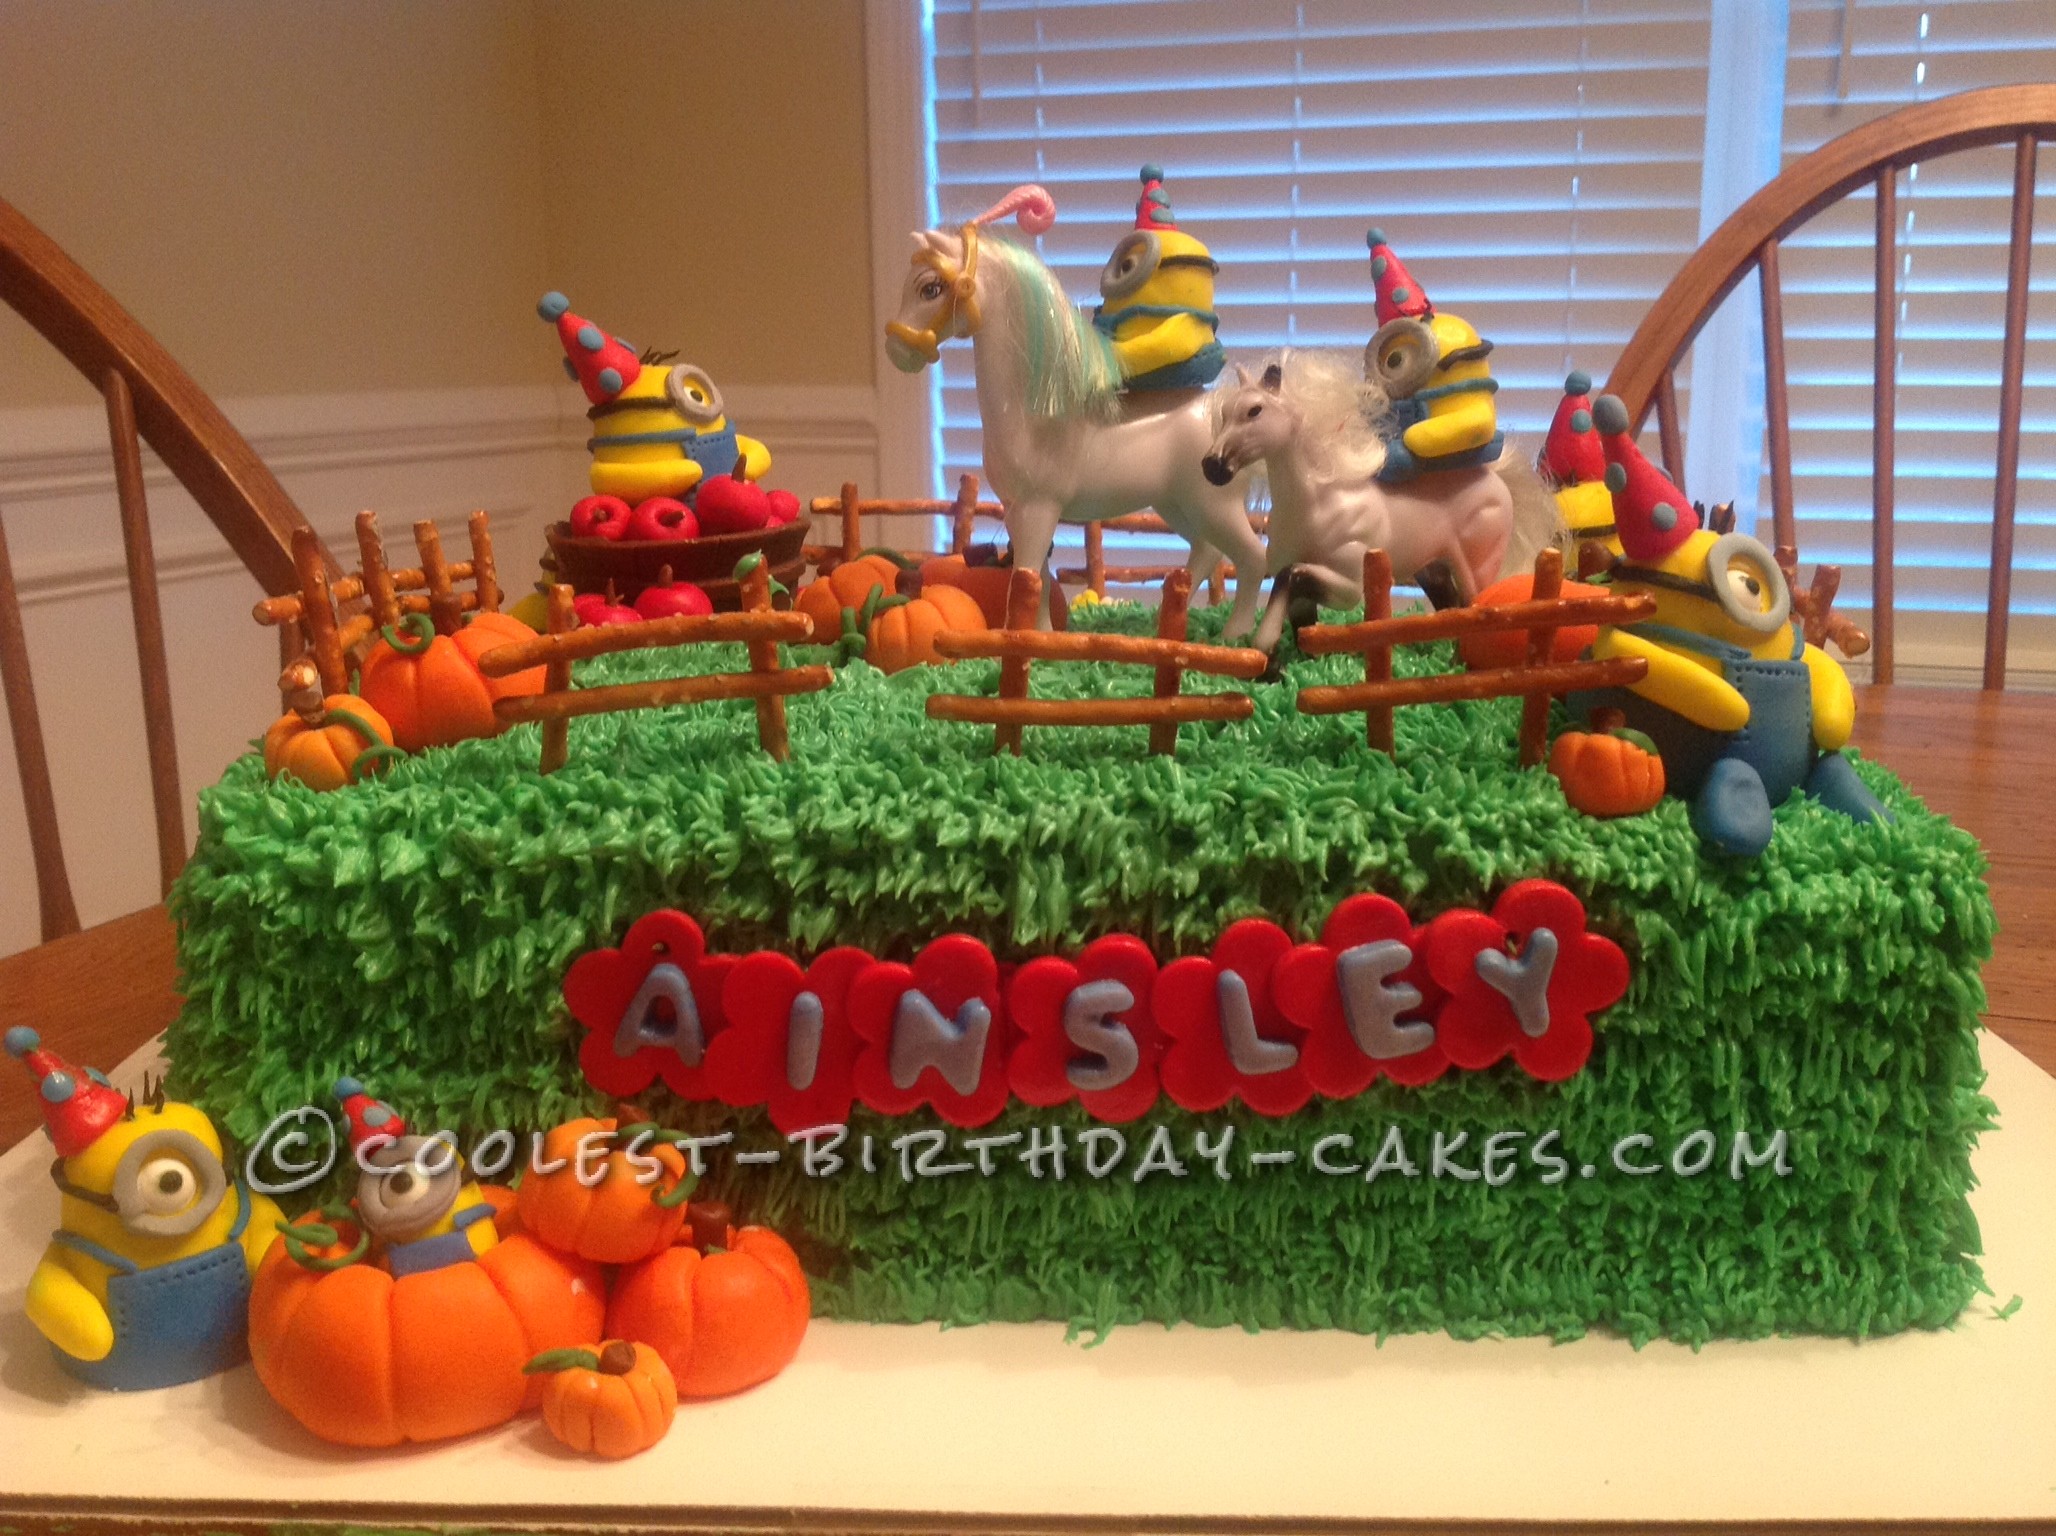 Minions Go Horseback Riding Birthday Cake